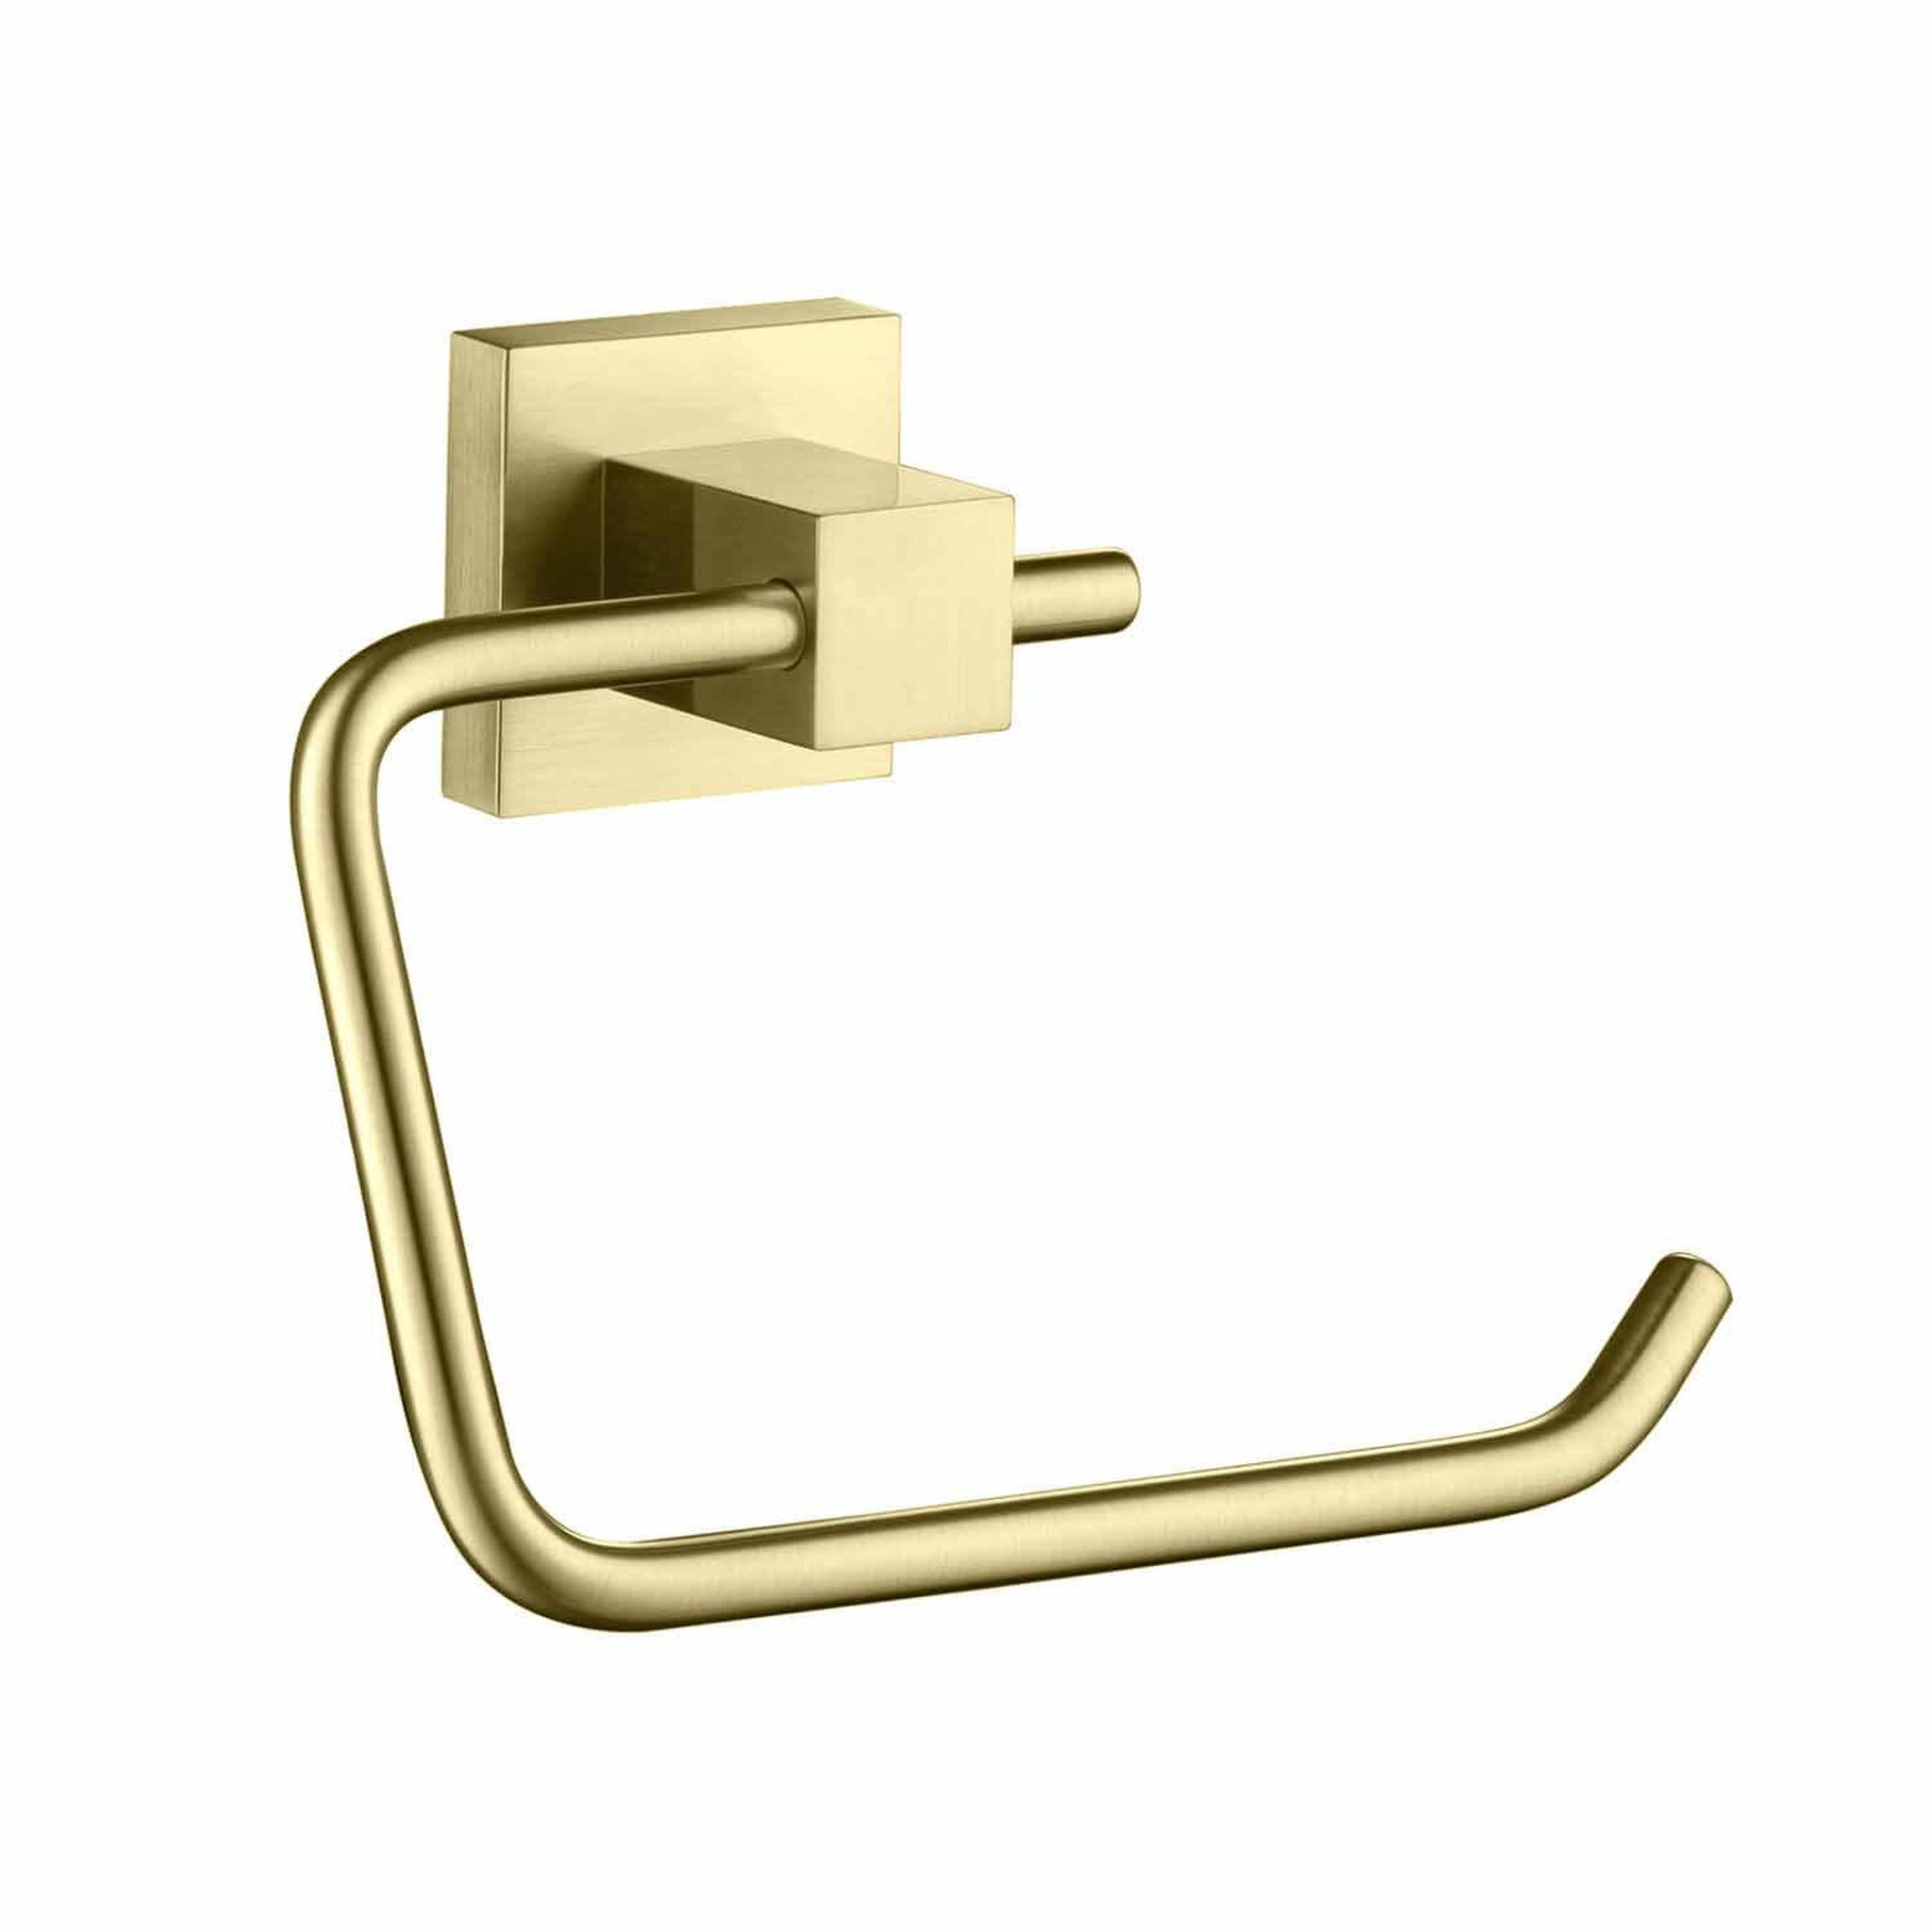 KIBI, KIBI Cube Brass Bathroom Toilet Paper Holder in Brushed Gold Finish